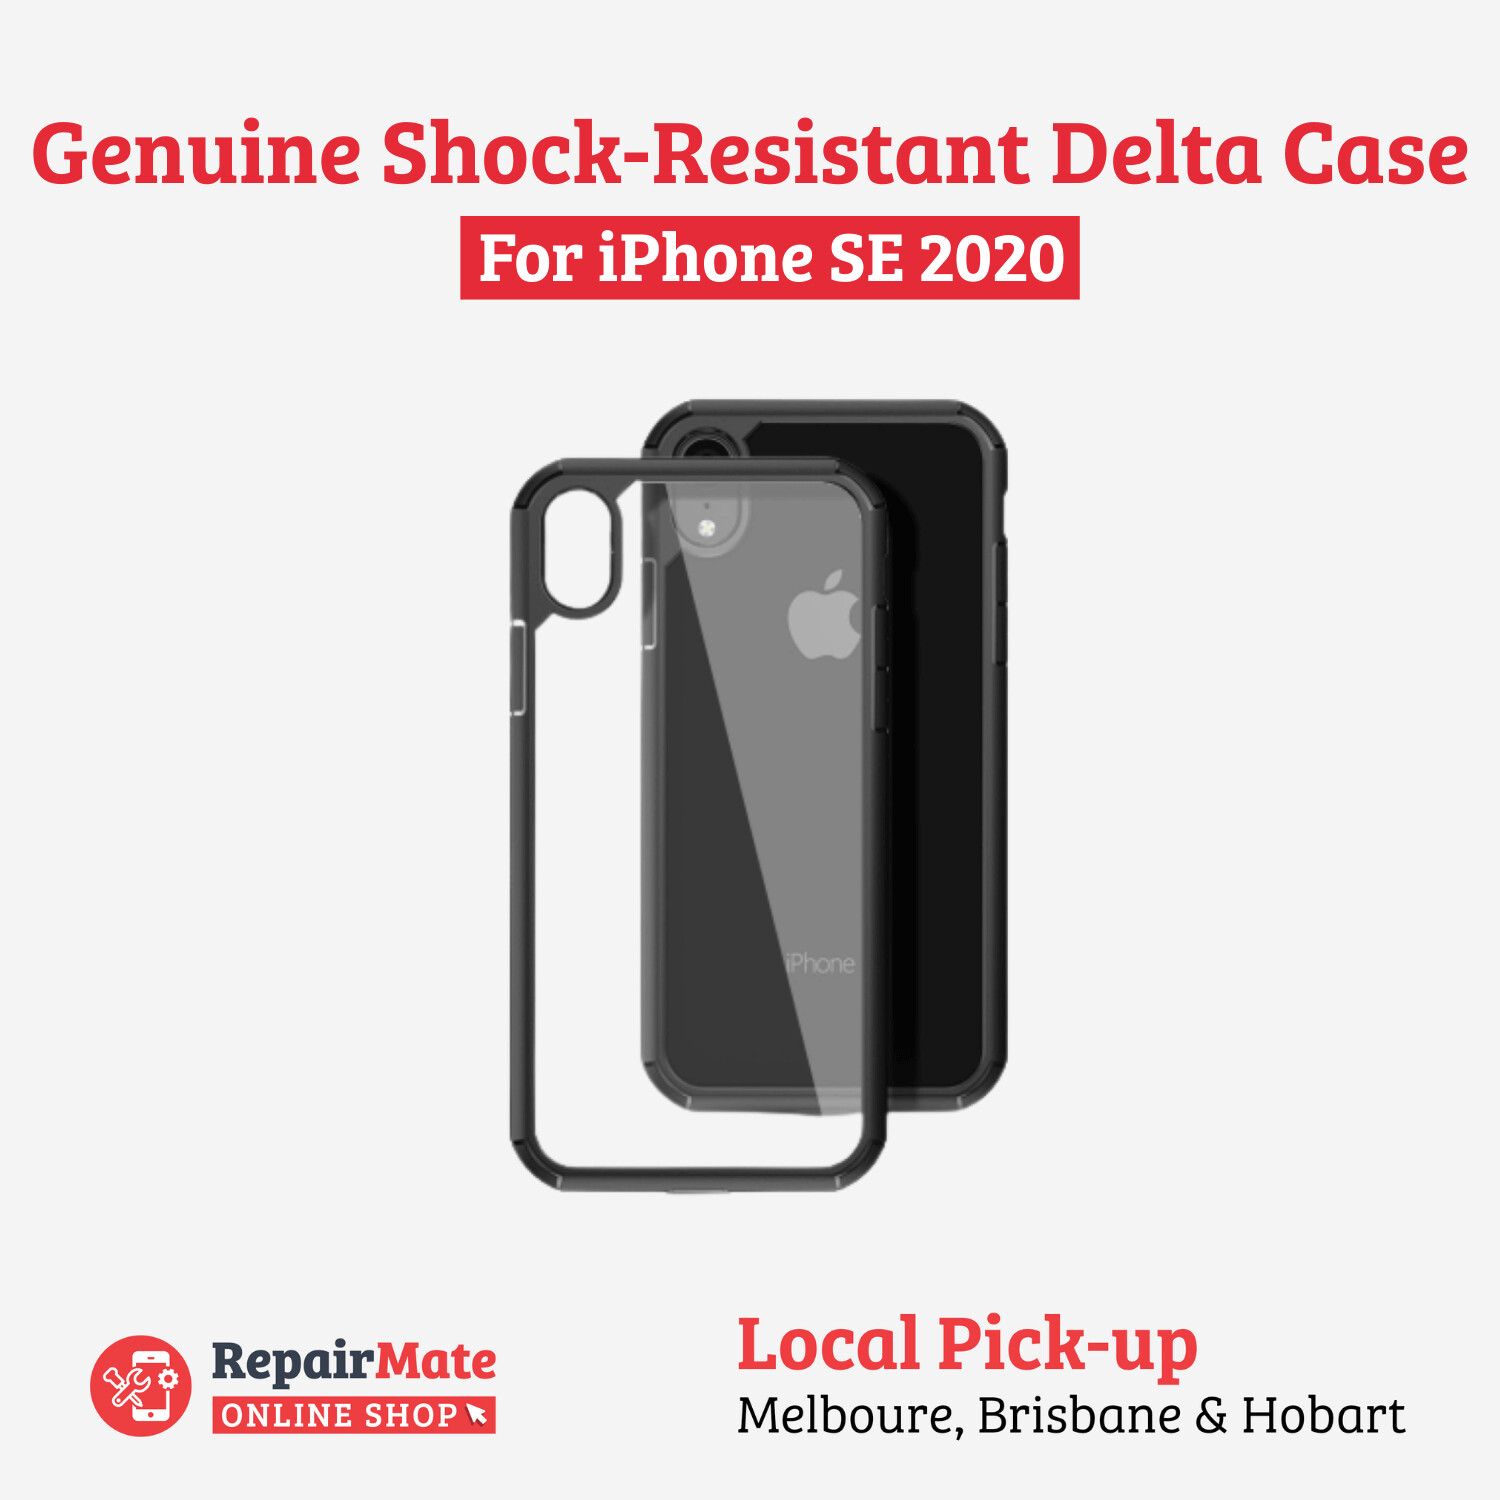 iPhone SE (2020) Genuine Shock-Resistant Delta Case